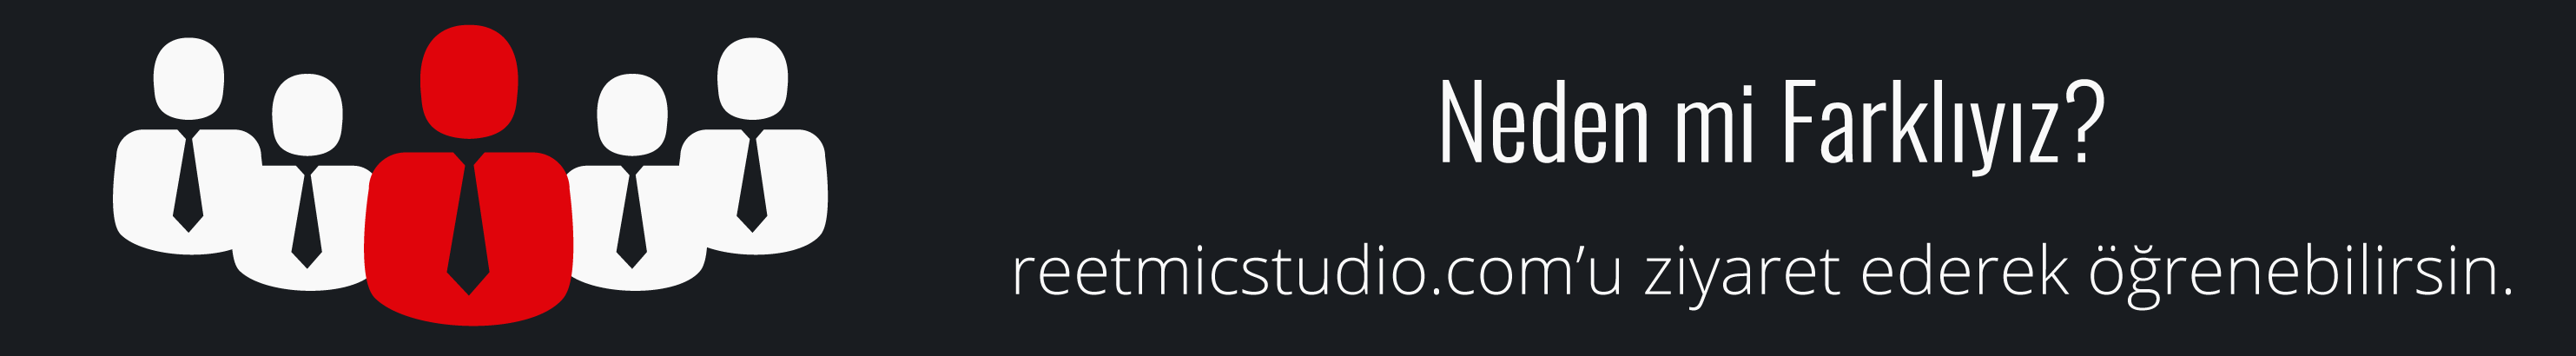 Reetmic Studio's profile banner